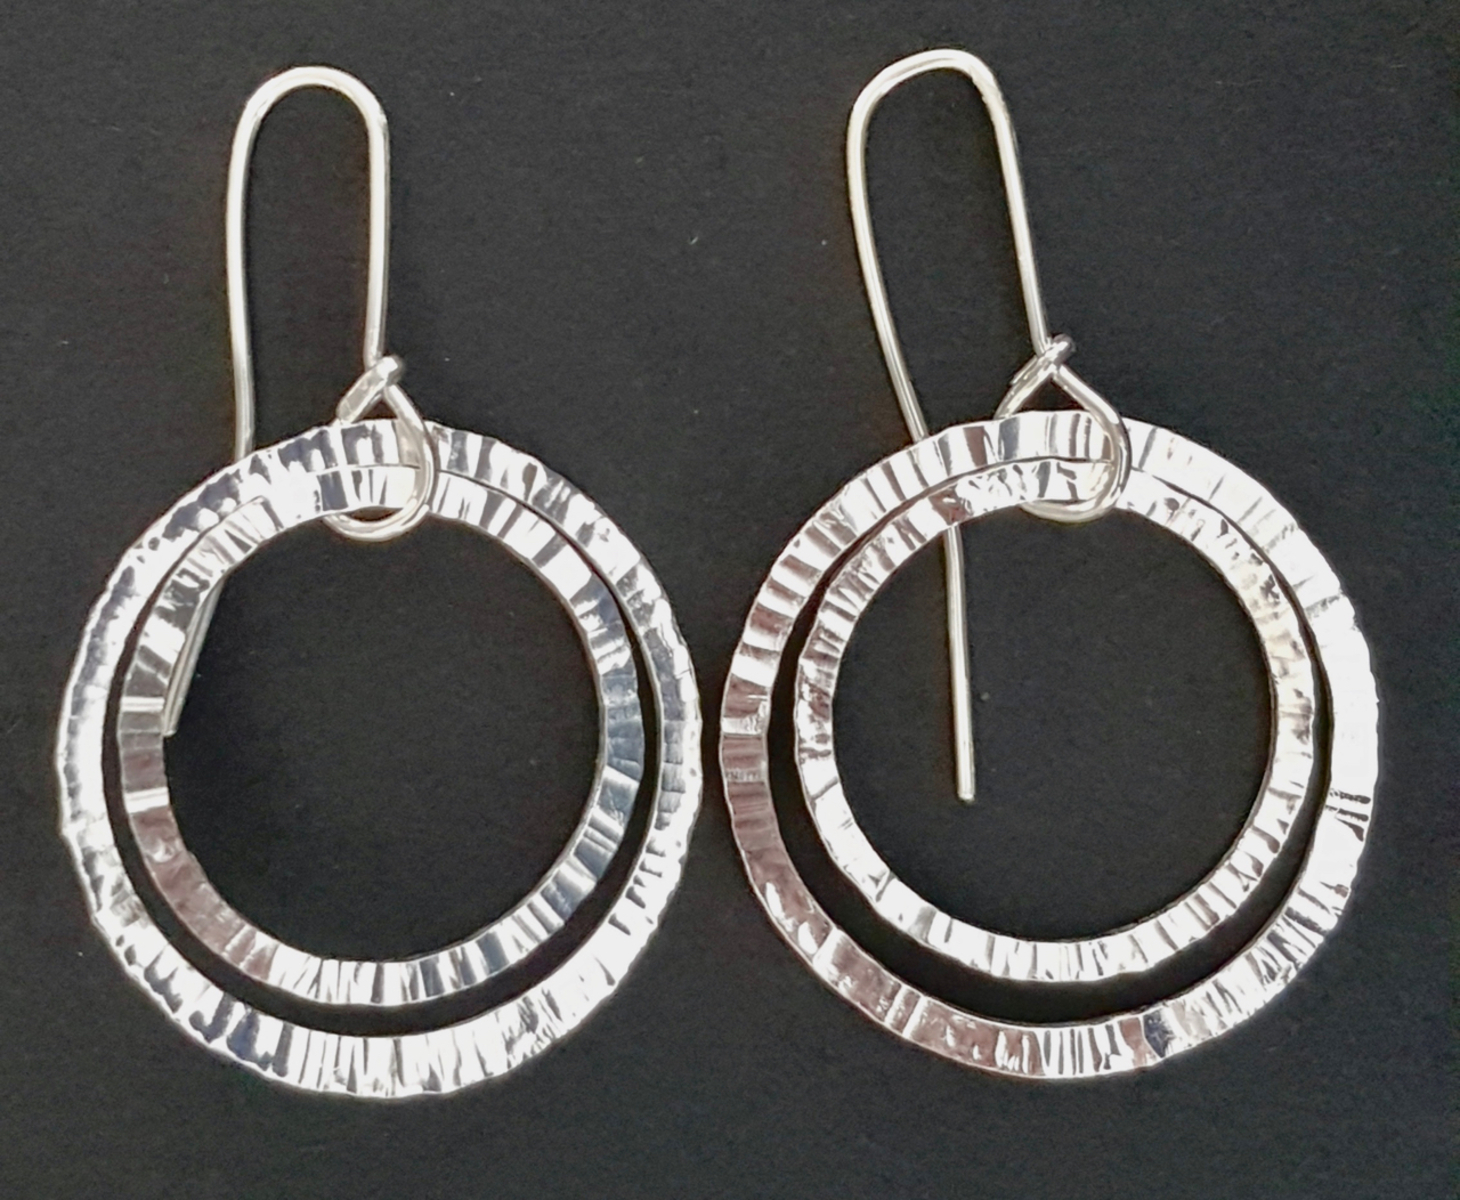 Forged double loop earrings (L)